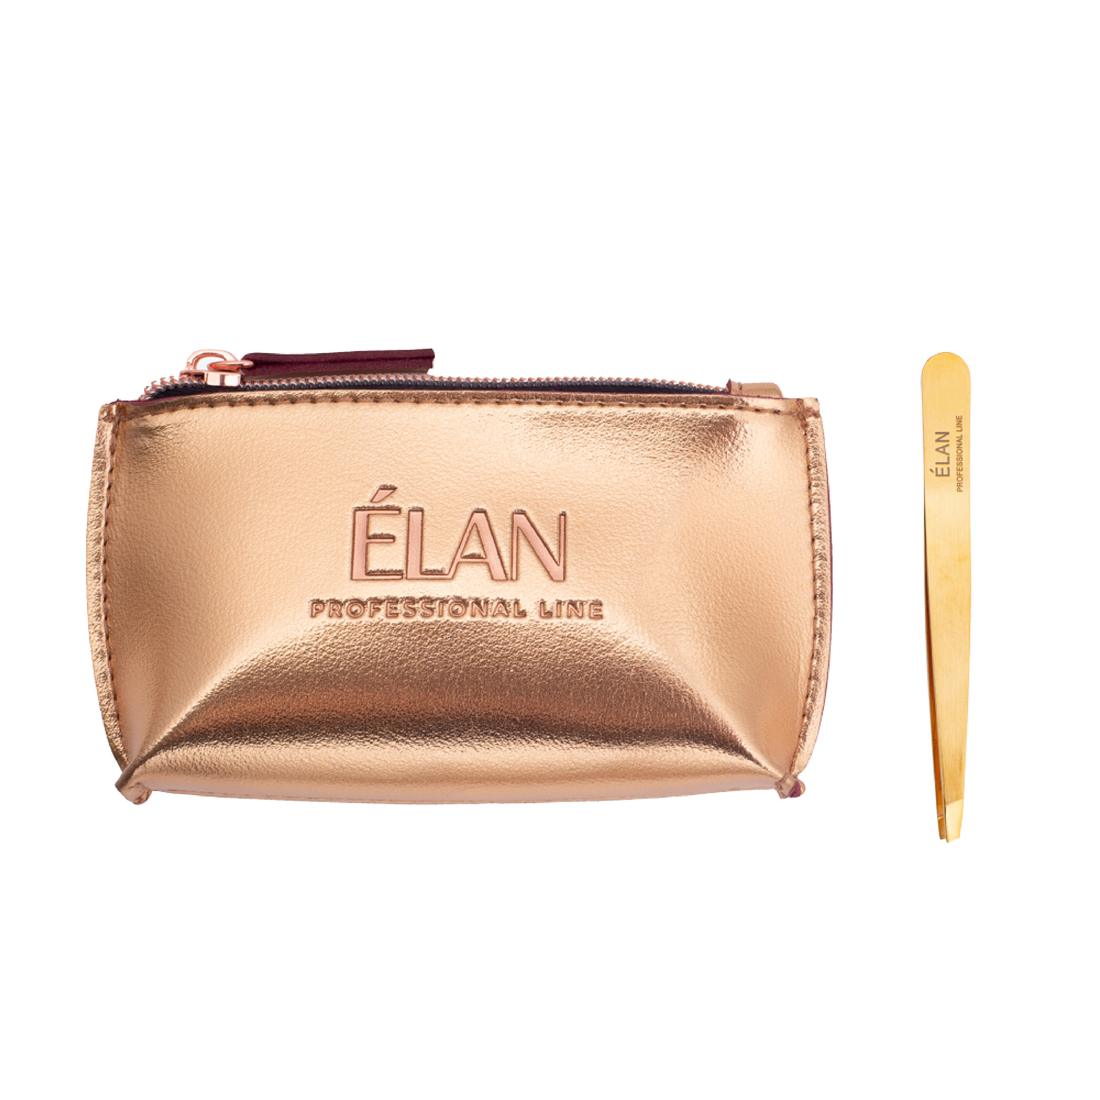 ÉLAN - Set of Professional Eyebrow Tweezers + Scissors (Gold)